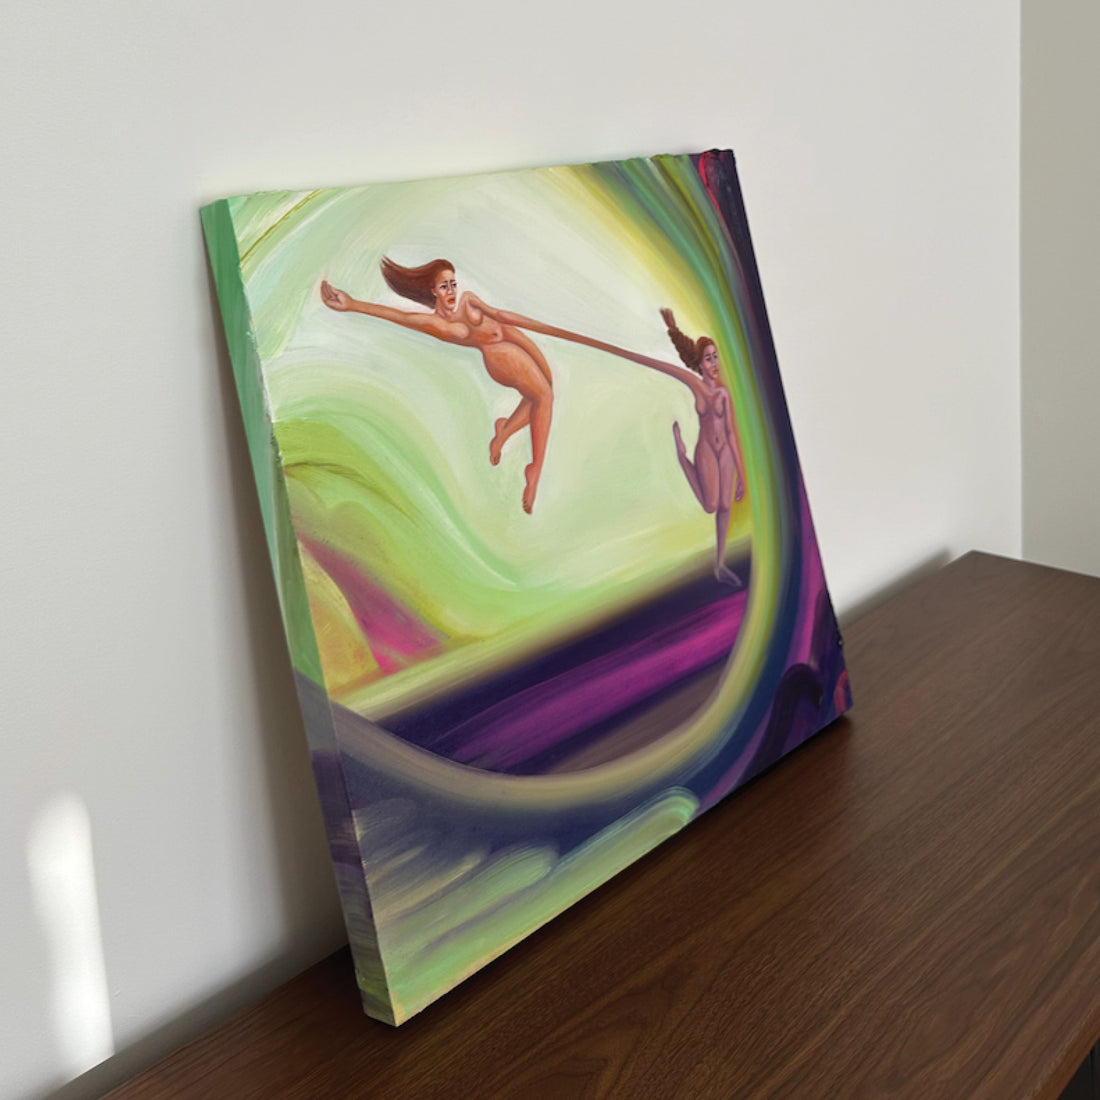 Anam Feerasta "Dual Identities II" abstract figurative painting Canadian Artist